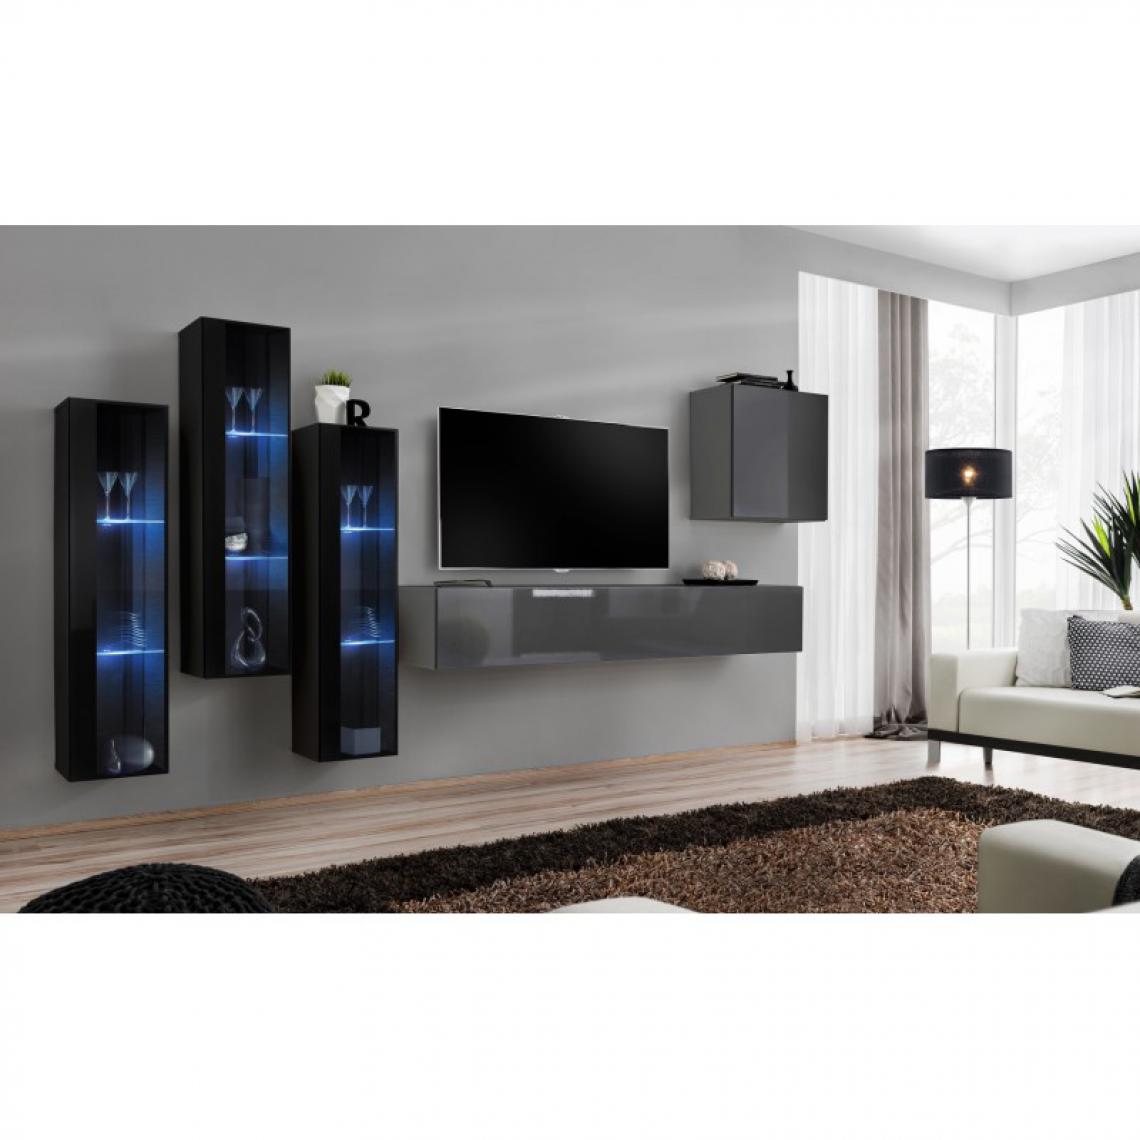 Ac-Deco - Meuble TV Mural Design Switch XIII 330cm Noir & Gris - Meubles TV, Hi-Fi